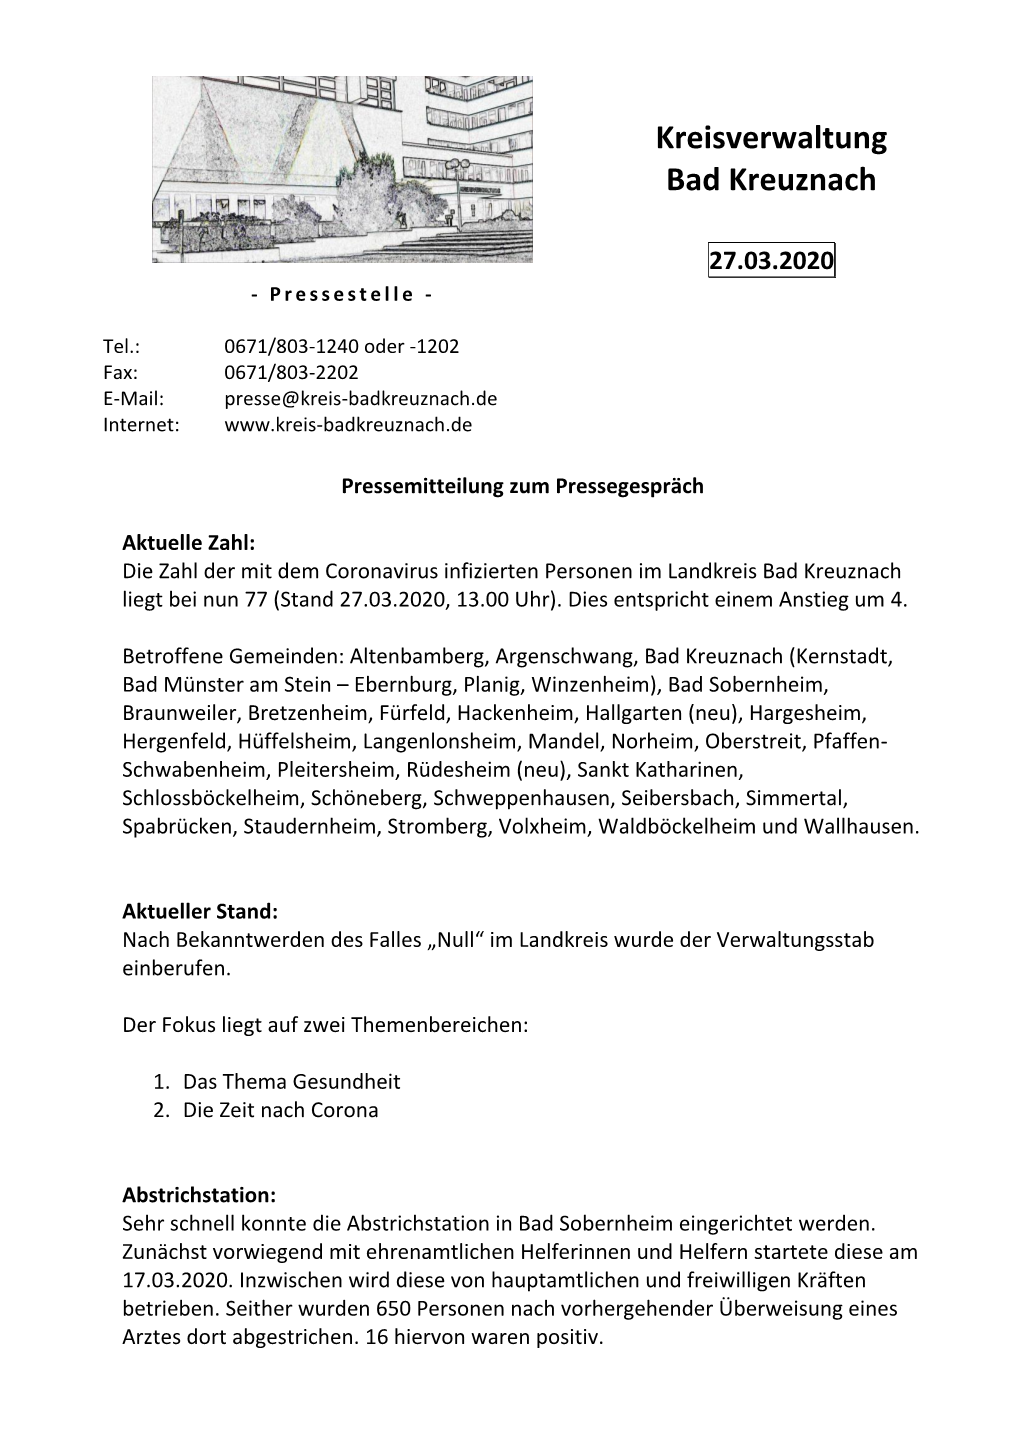 Kreisverwaltung Bad Kreuznach 27.03.2020